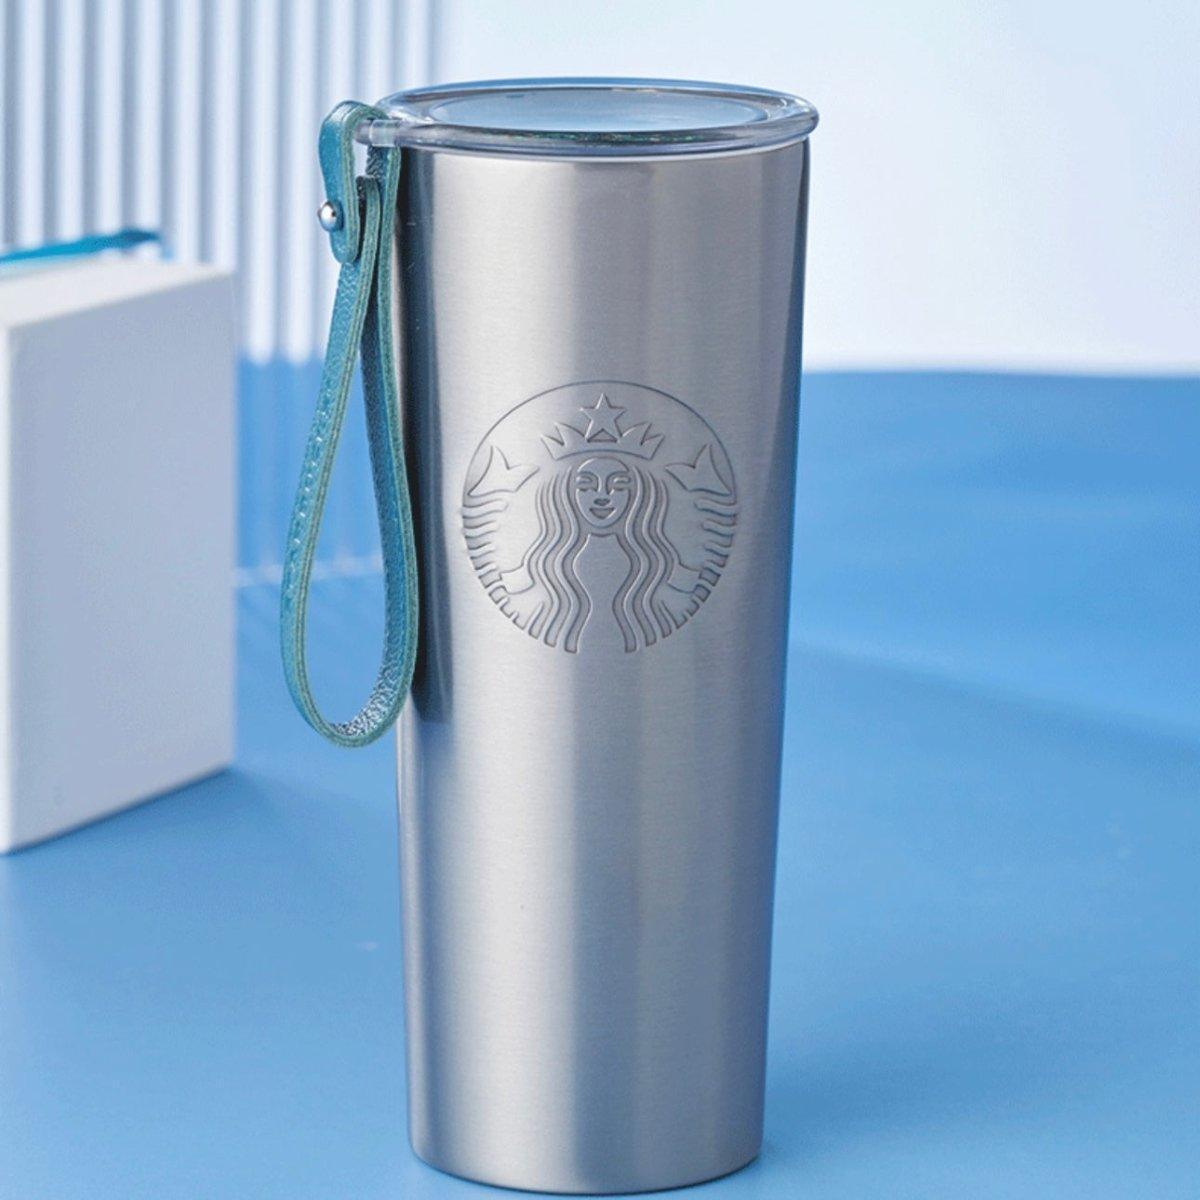 Starbucks 473ml/16oz Blueish-Green Stainless Steel Travelling Cup with Strap - Ann Ann Starbucks